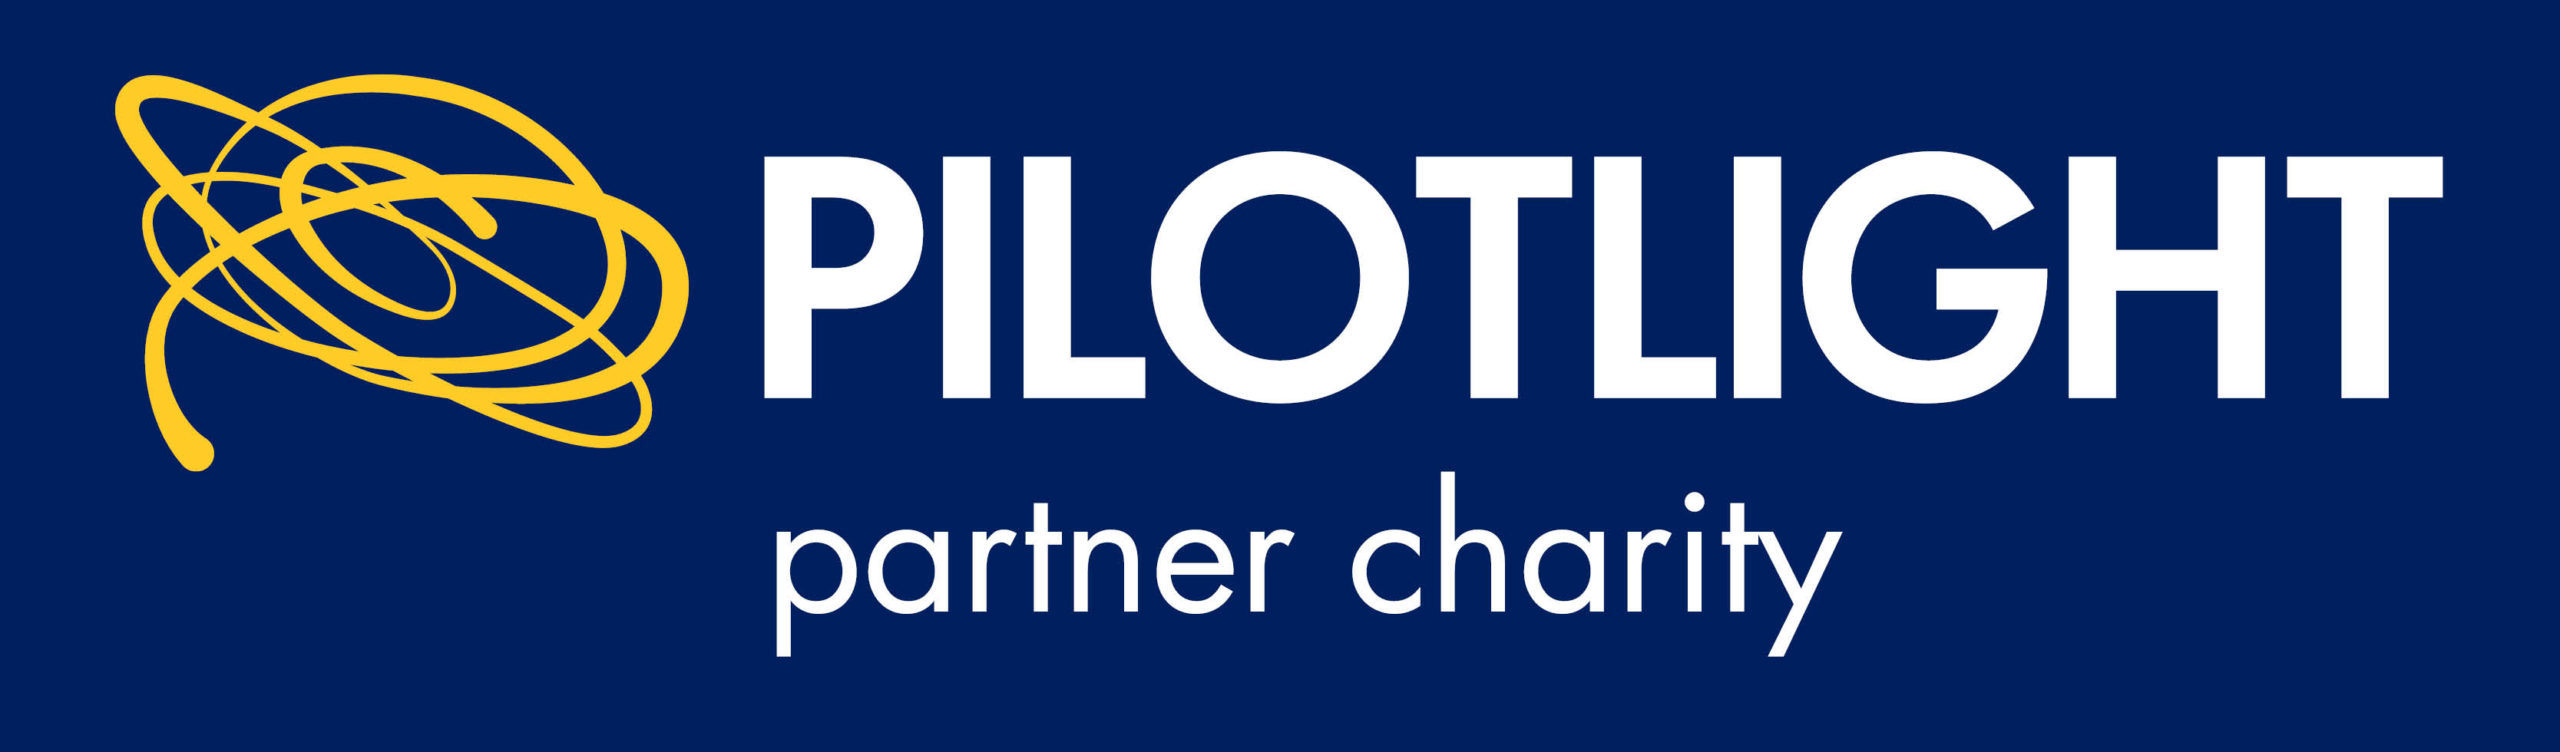 PilotLight Partner Charity logo